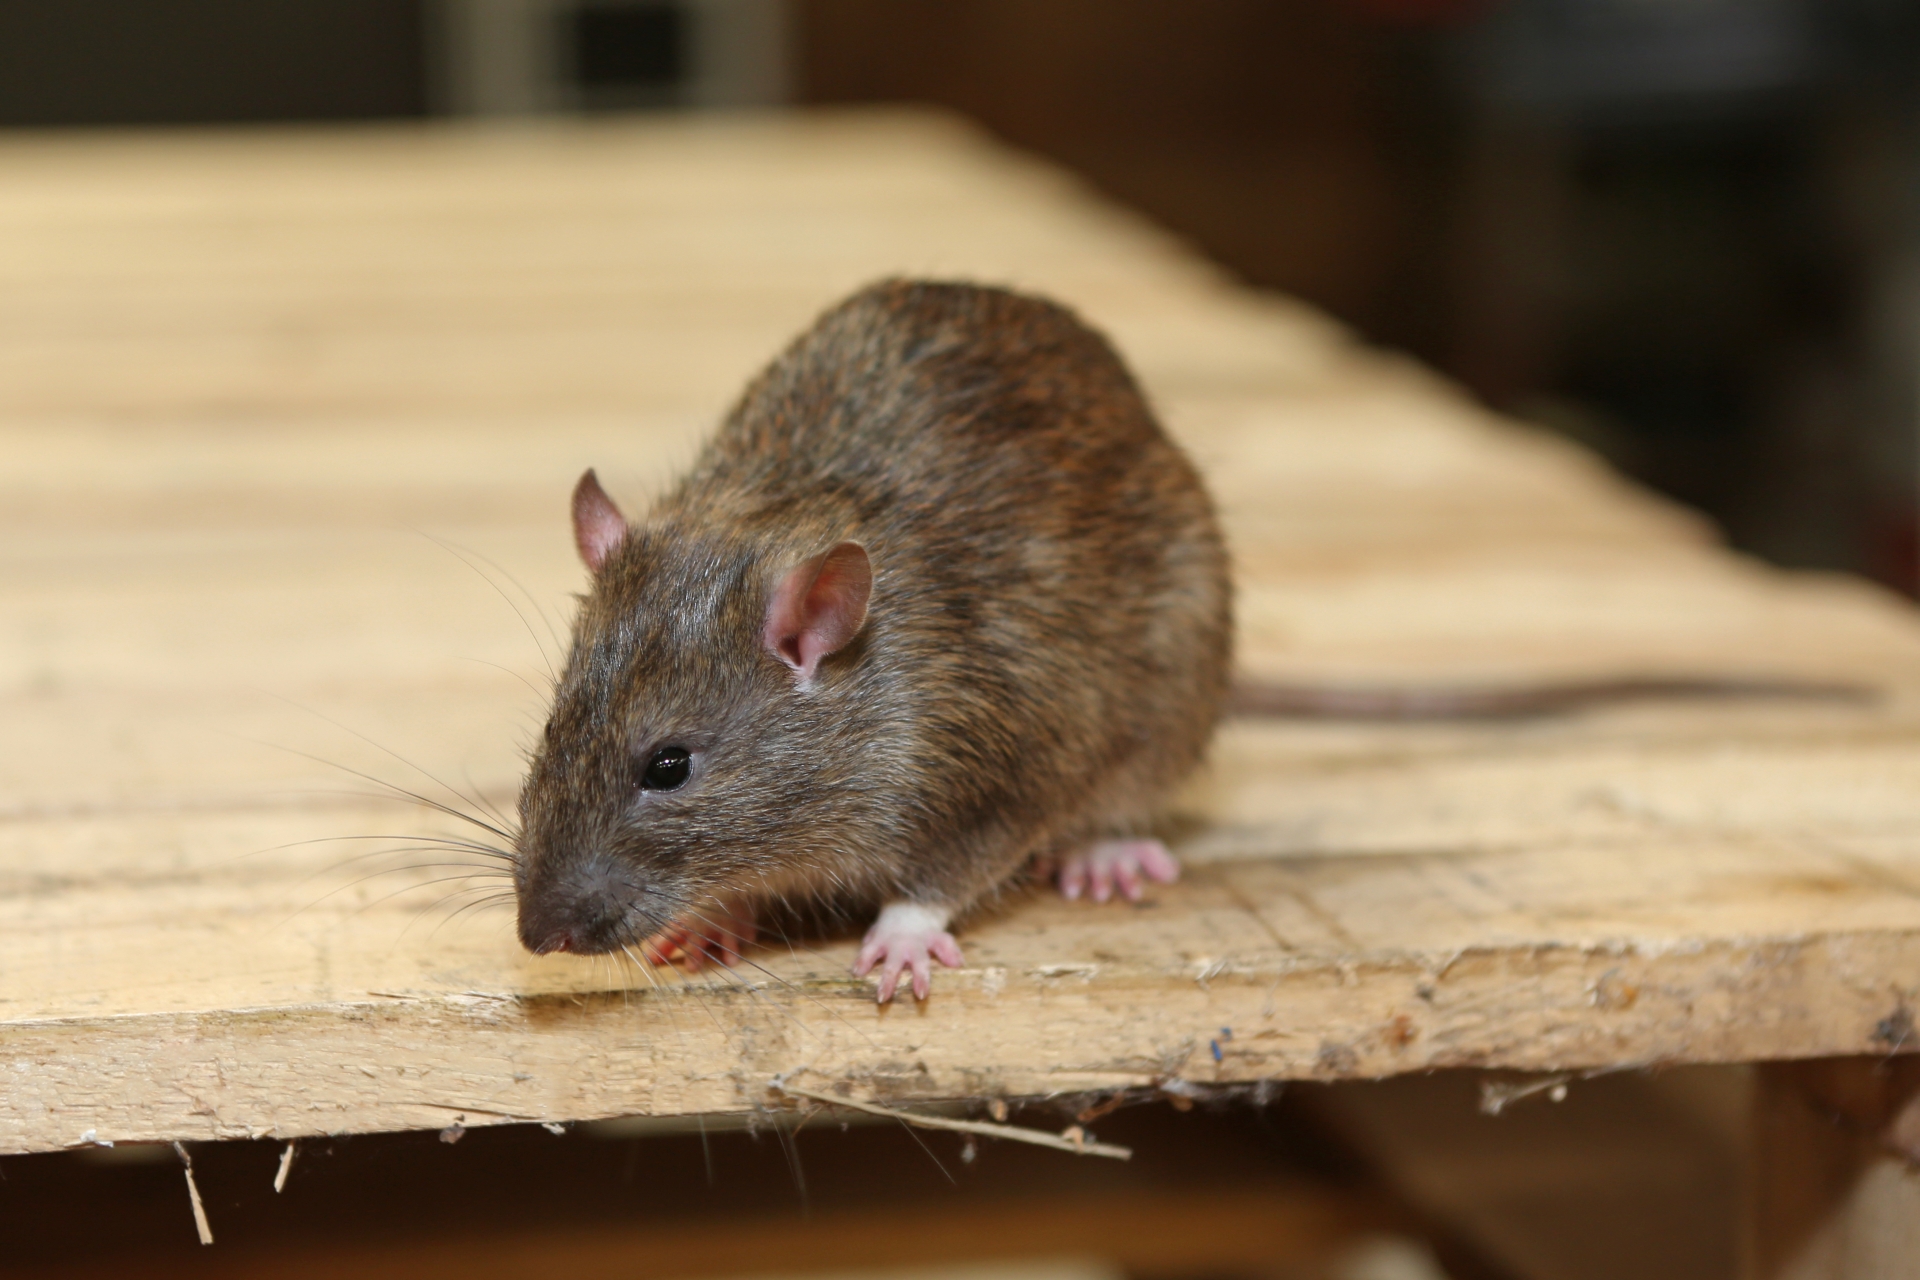 Rat extermination, Pest Control in Nine Elms, SW8. Call Now 020 8166 9746